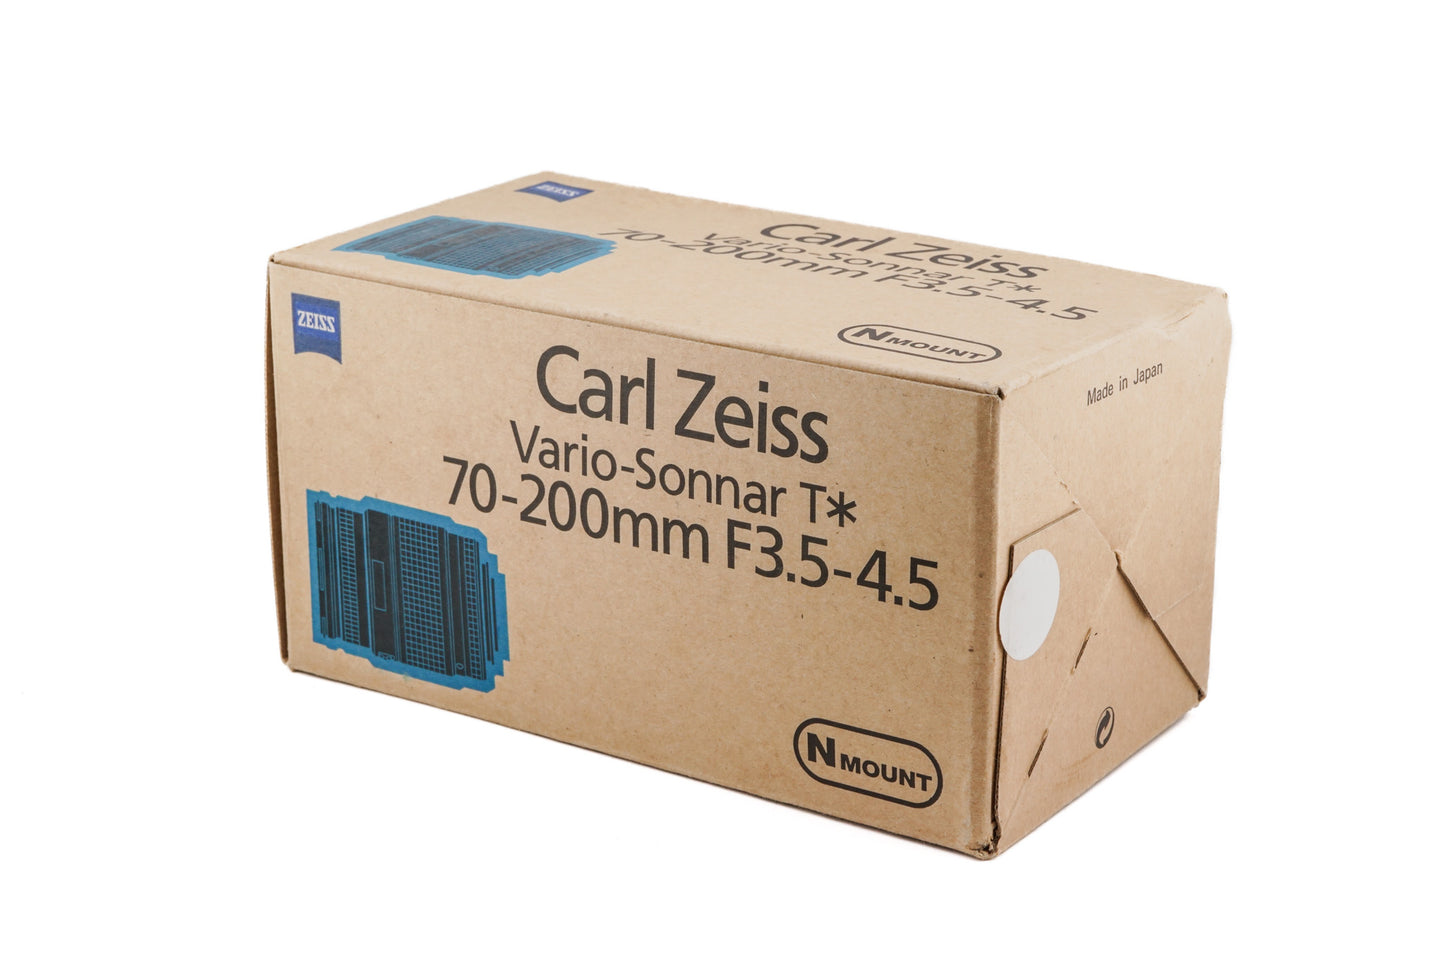 Carl Zeiss 70-200mm f3.5-4.5 Vario-Sonnar T*